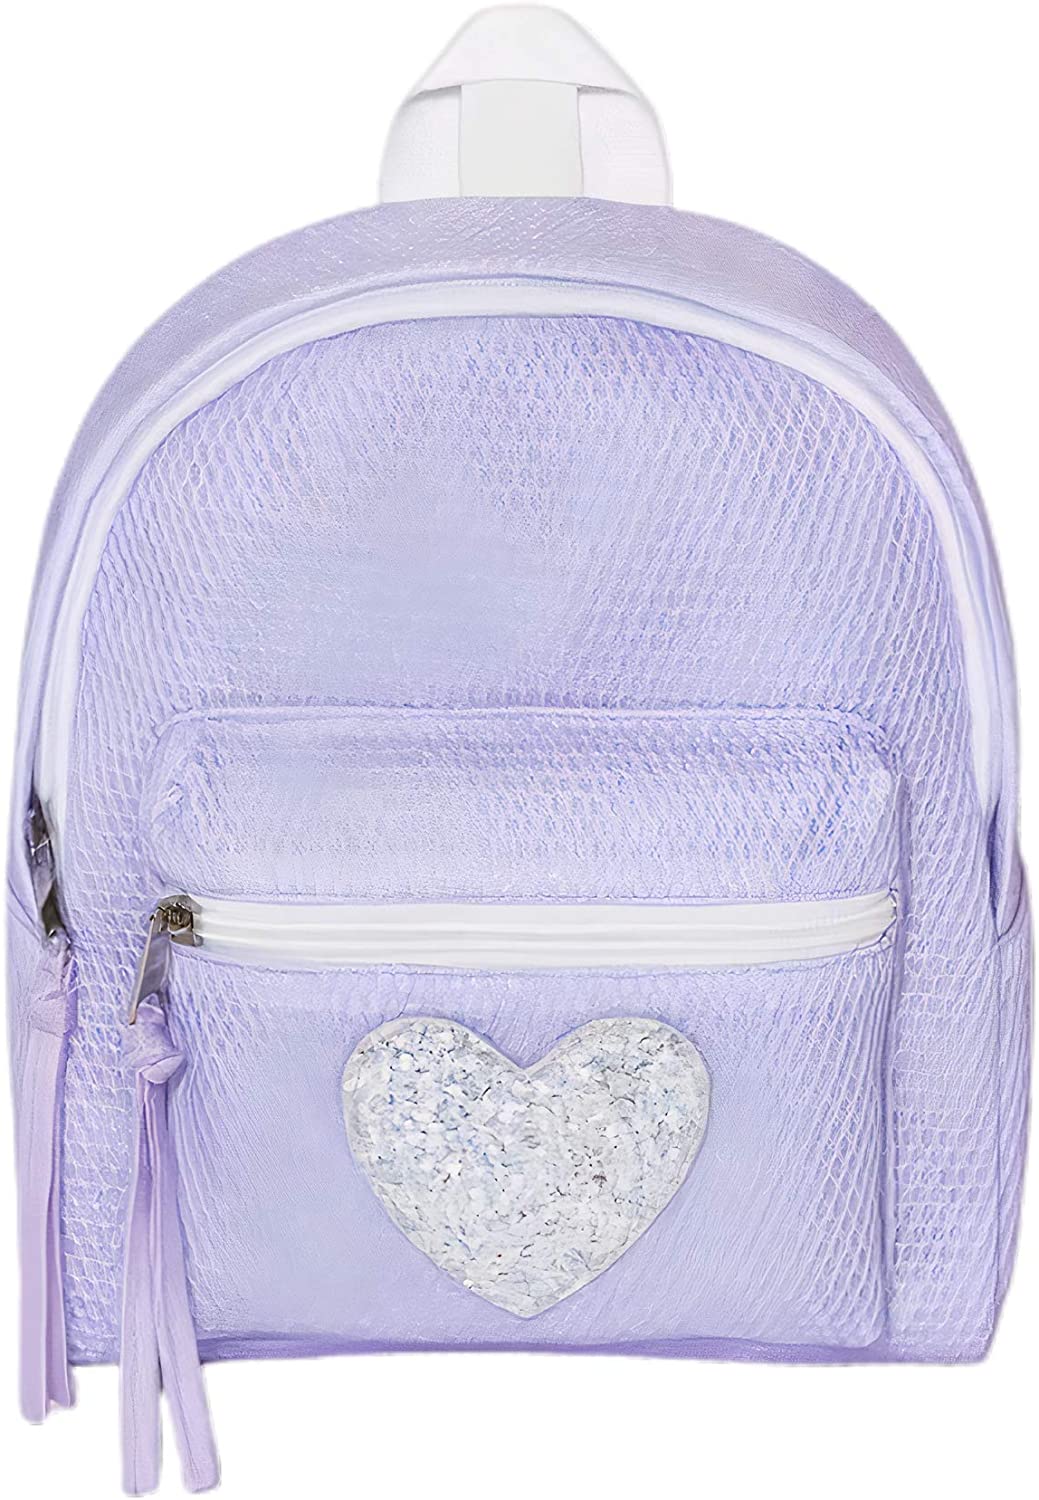 Small Backpack - Light purple - Kids